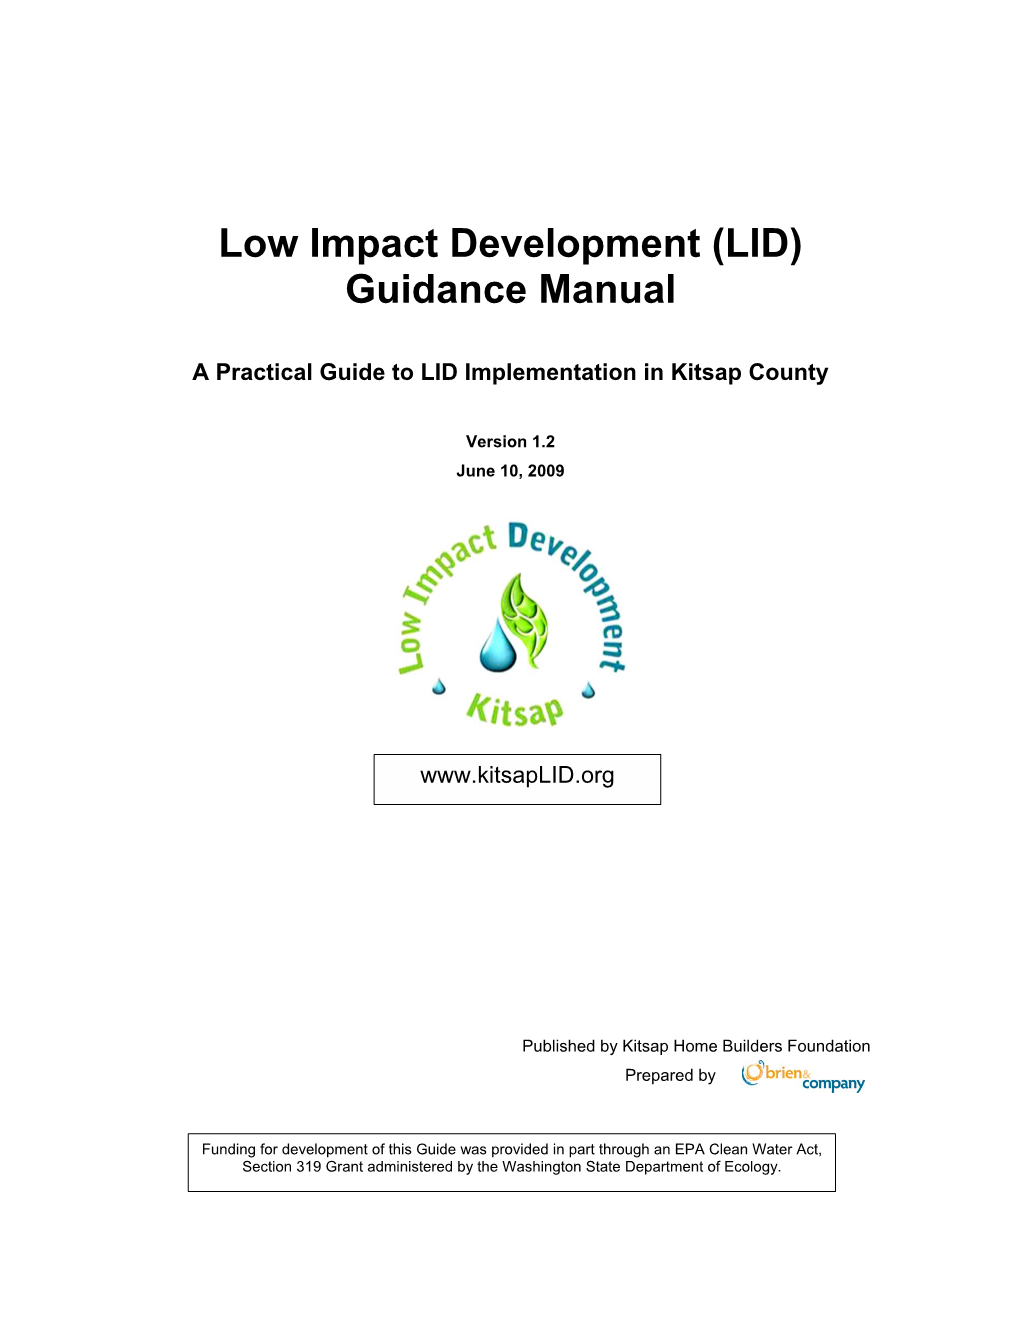 Low Impact Development (LID) Guidance Manual